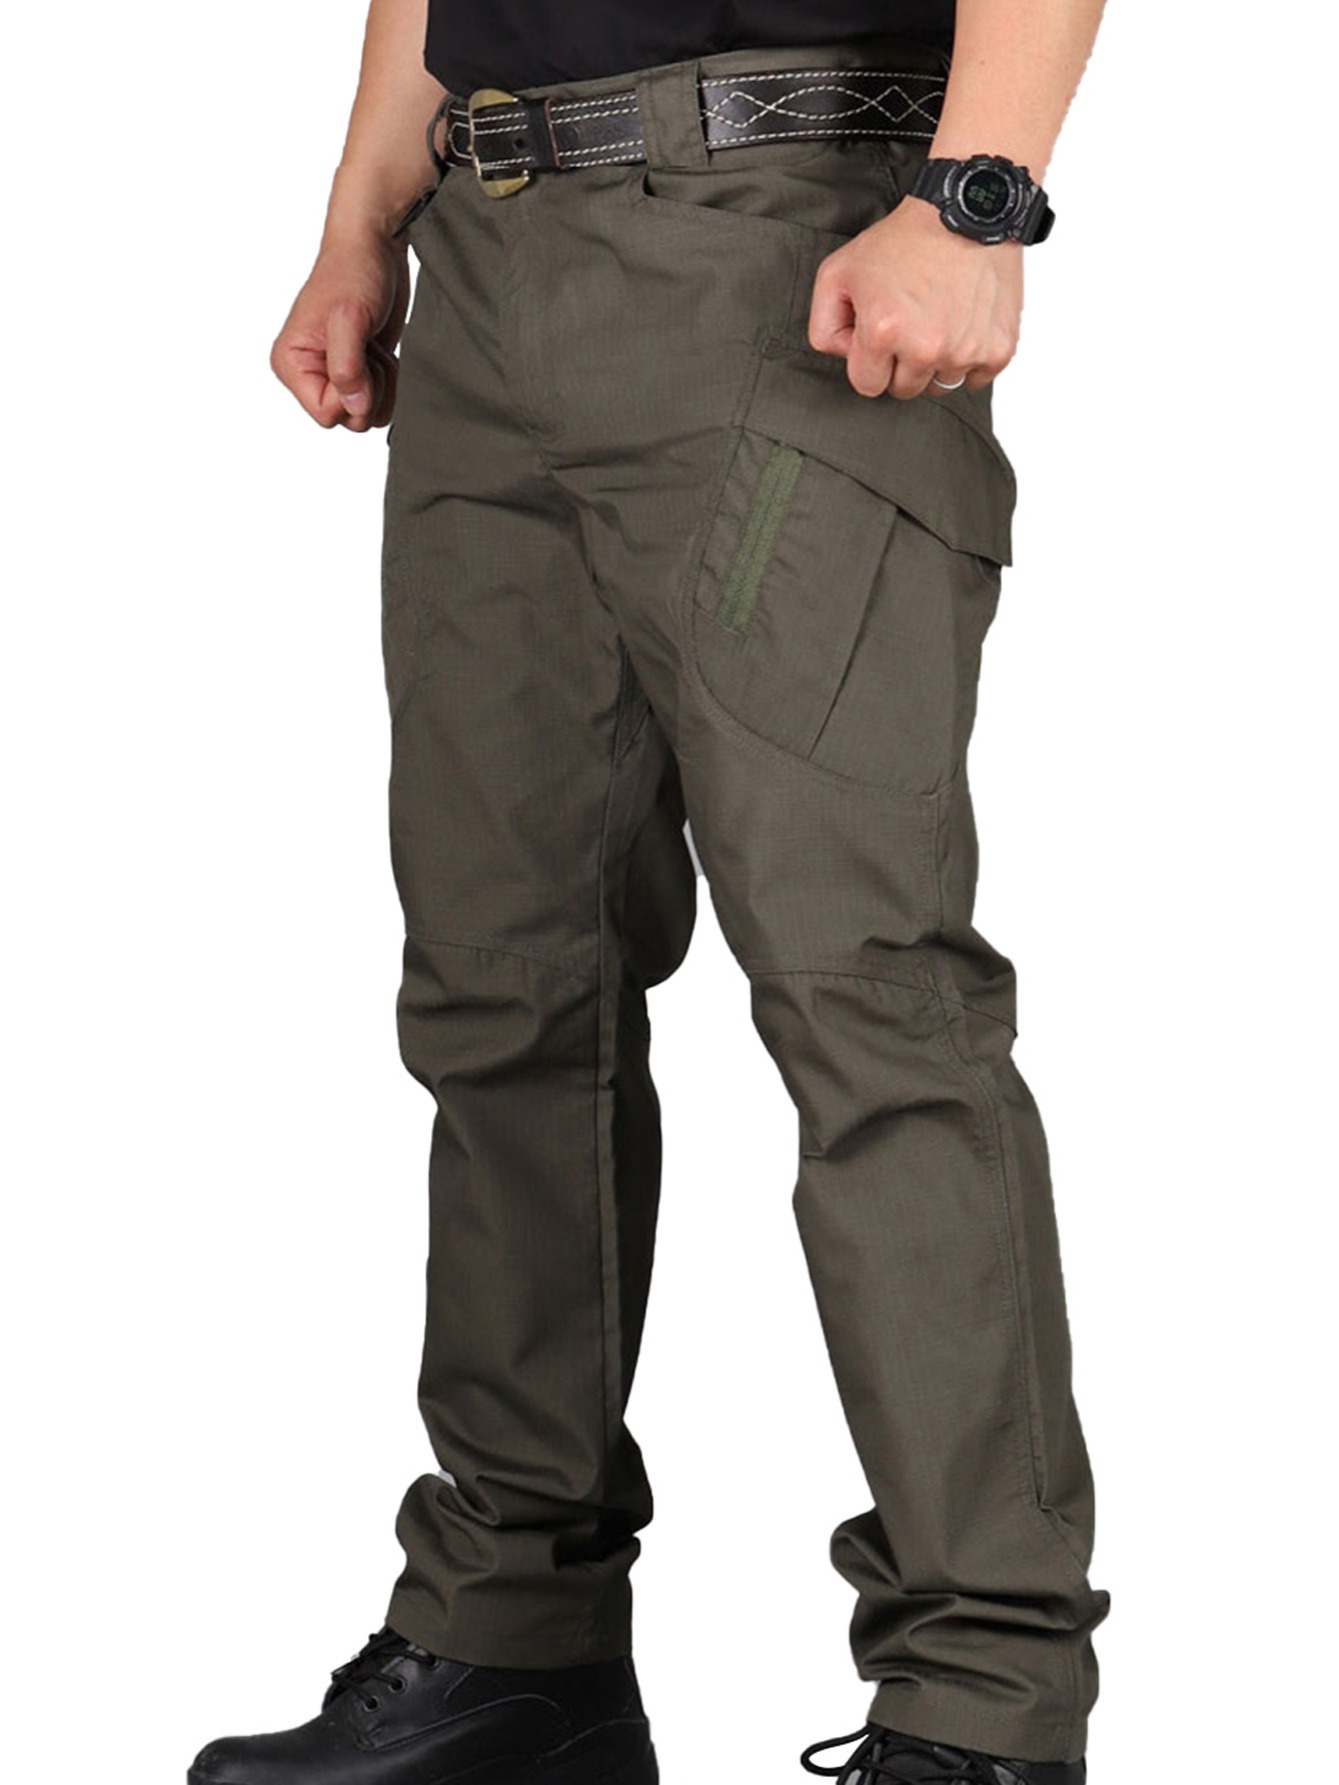 RTRDE Men's Cargo Work Pants Tactical Pants Water Resistant Ripstop Pants  Lightweight Work Hiking Outdoor Pants, M-3XL